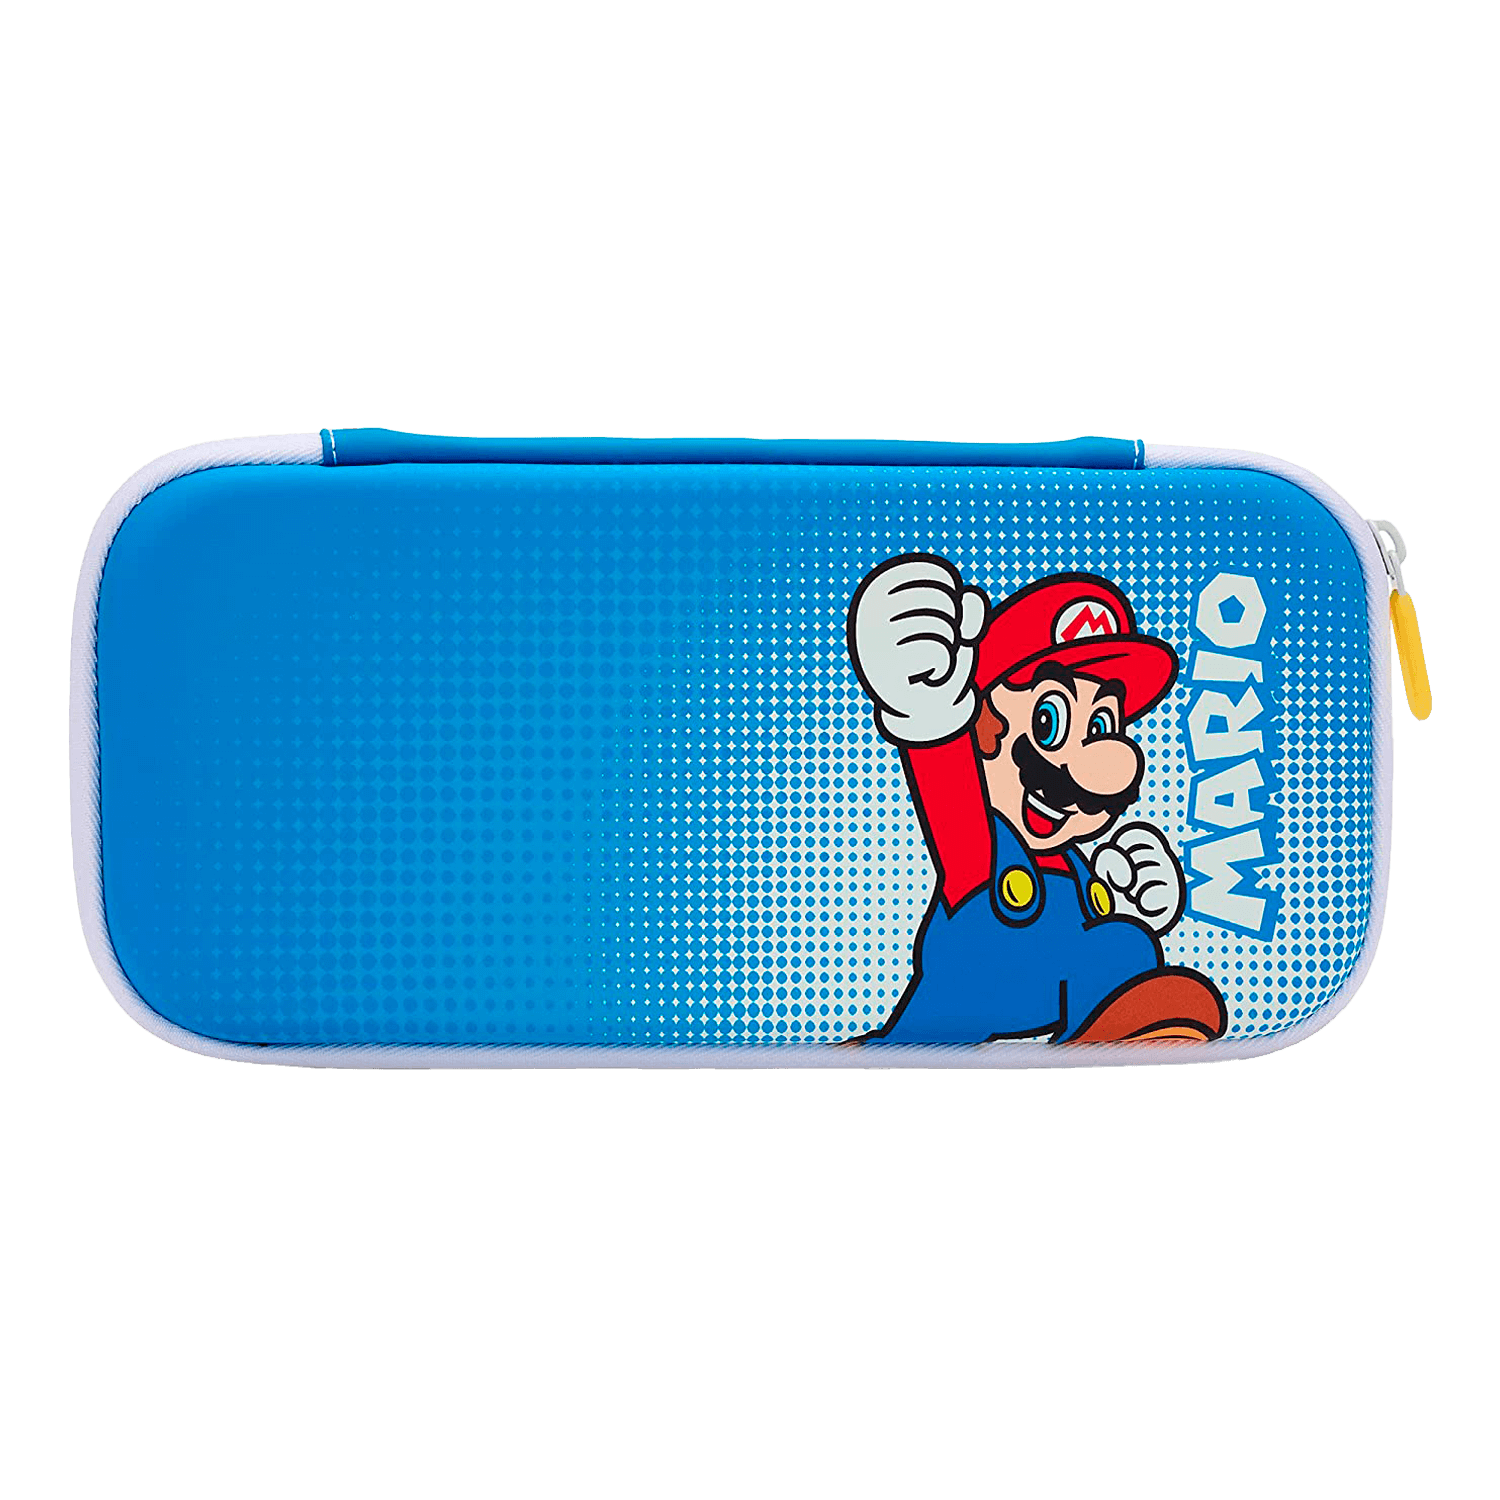 Case para Nintendo Switch PowerA - Mario Pop Art (PWA-A-02722)